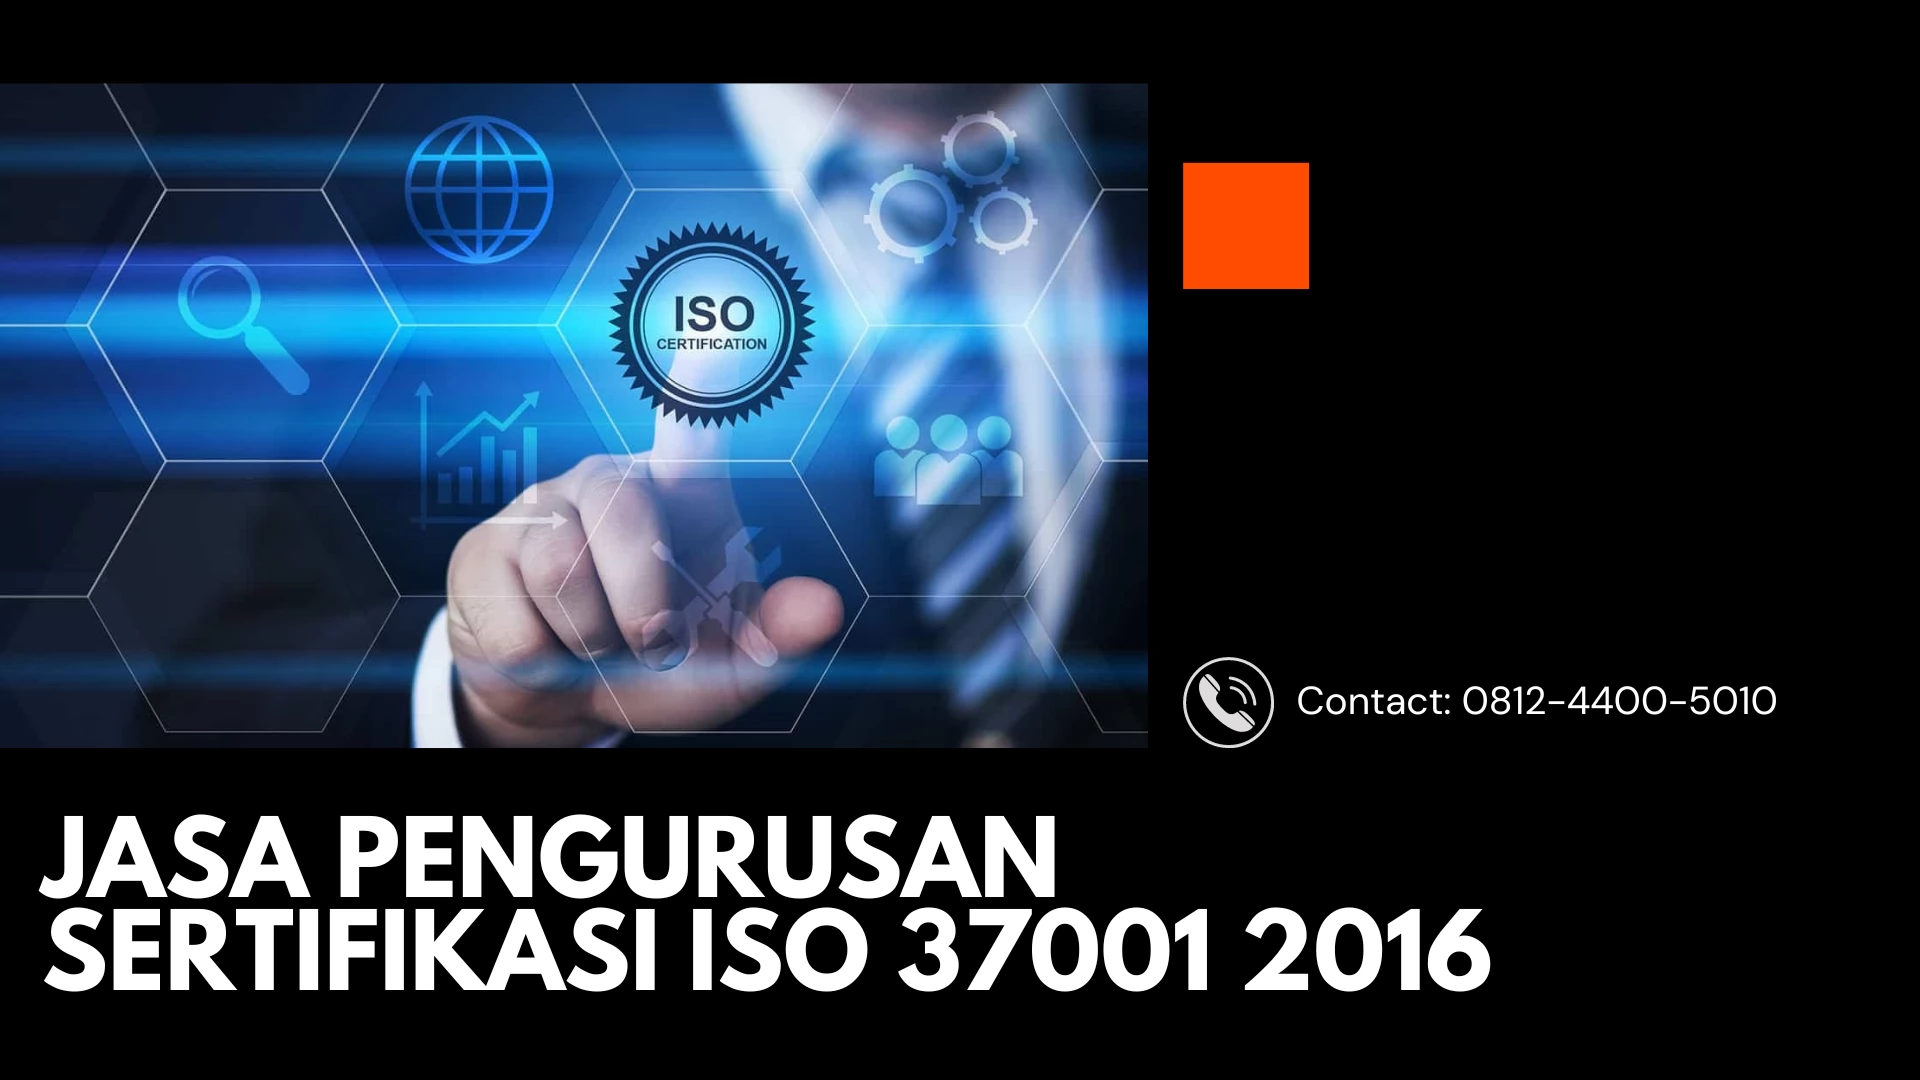 Jasa Pengurusan Sertifikasi Iso 37001 2016